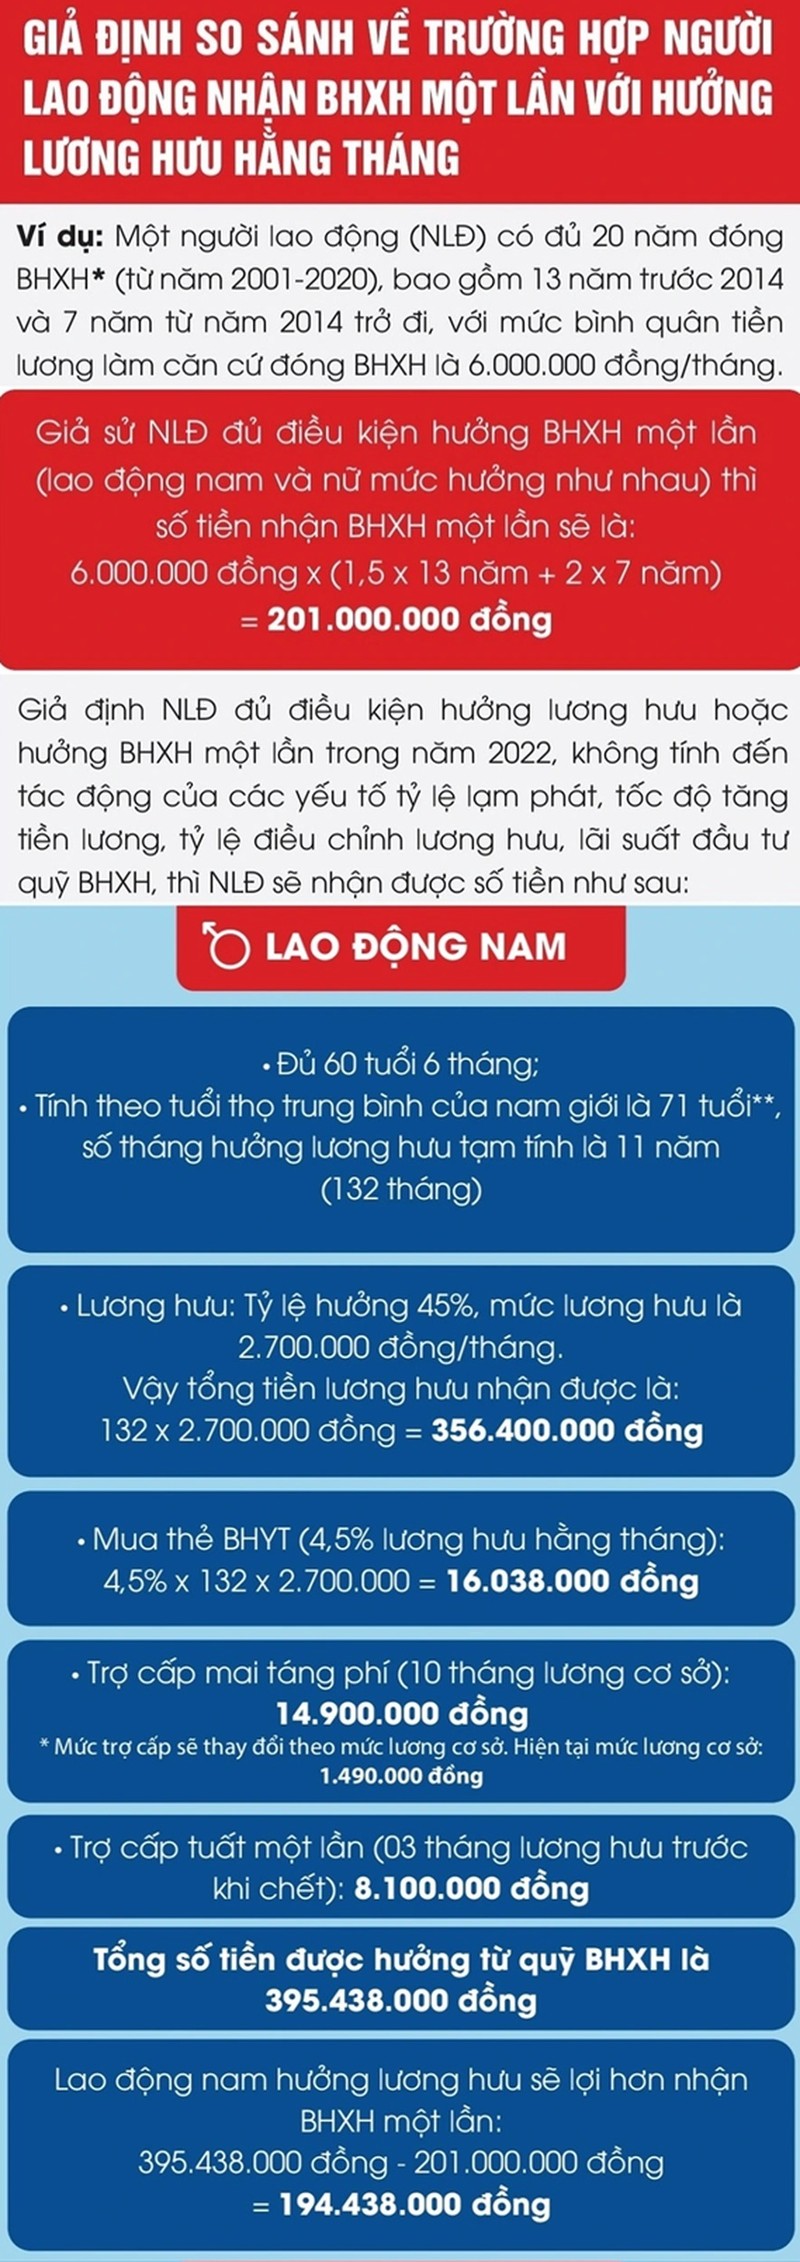 Rut BHXH mot lan: Thiet thoi qua lon cho nguoi lao dong-Hinh-2